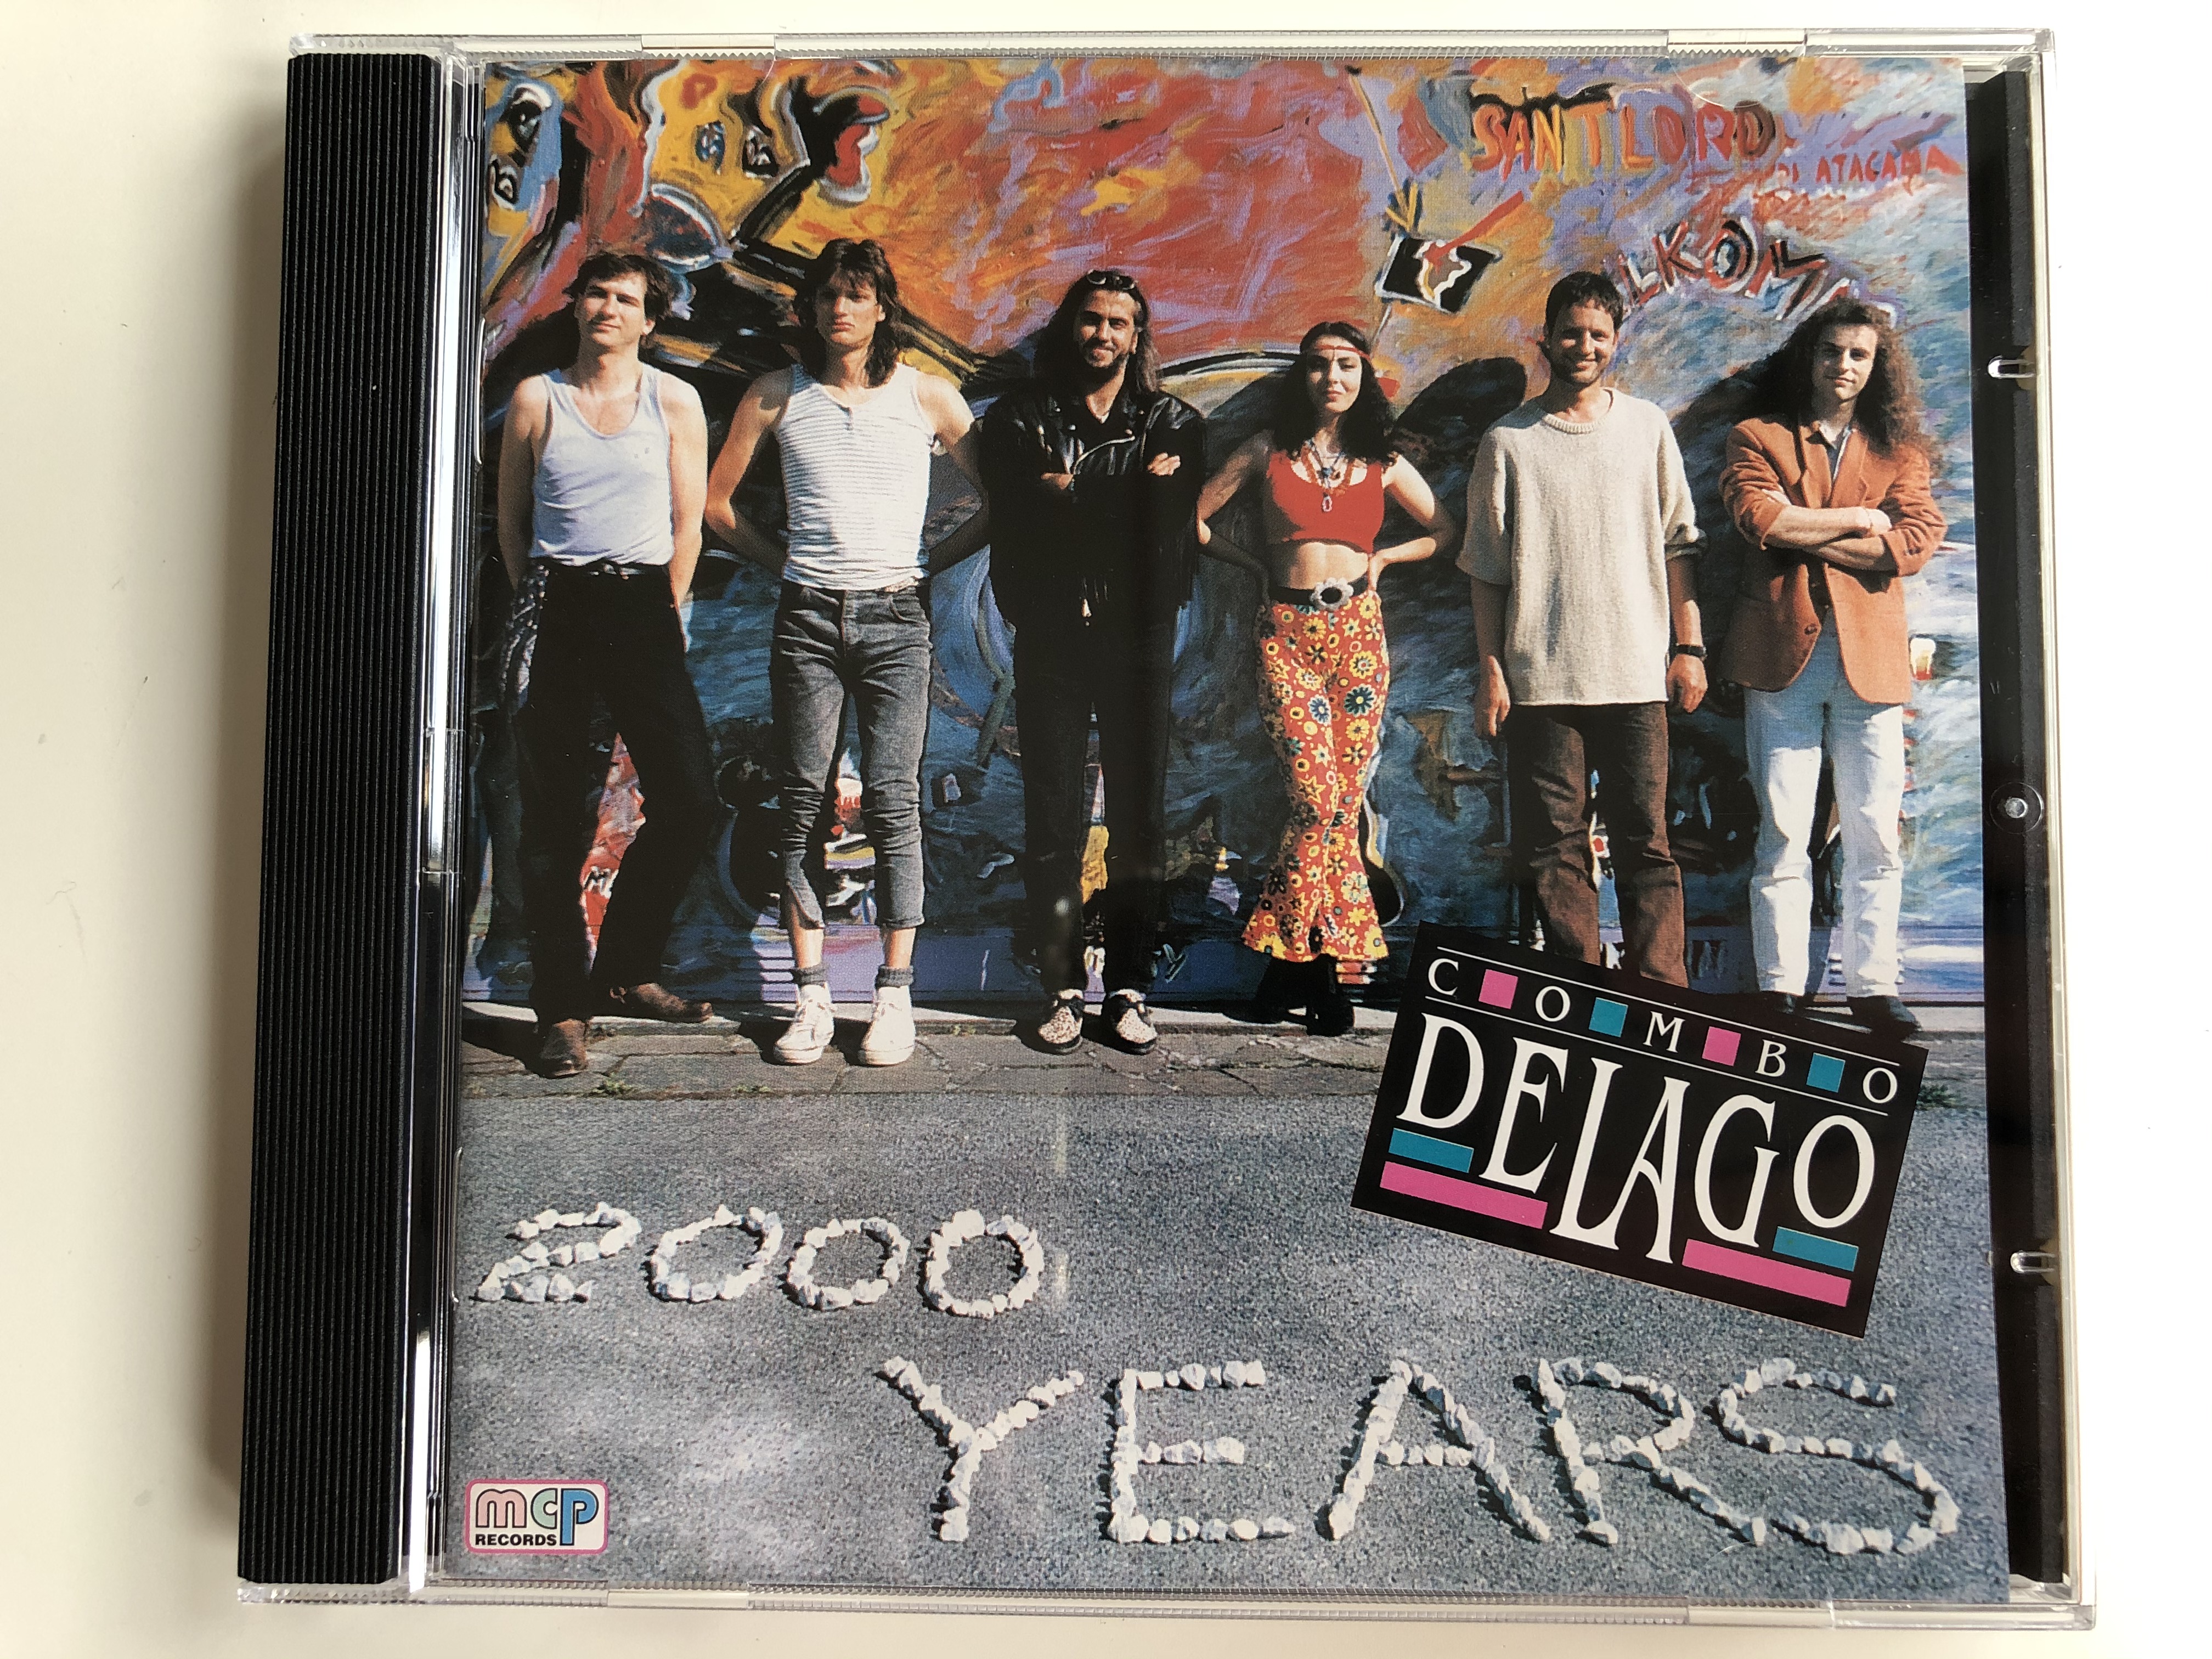 combo-delago-2000-years-mcp-records-audio-cd-stereo-cd-158-1-.jpg